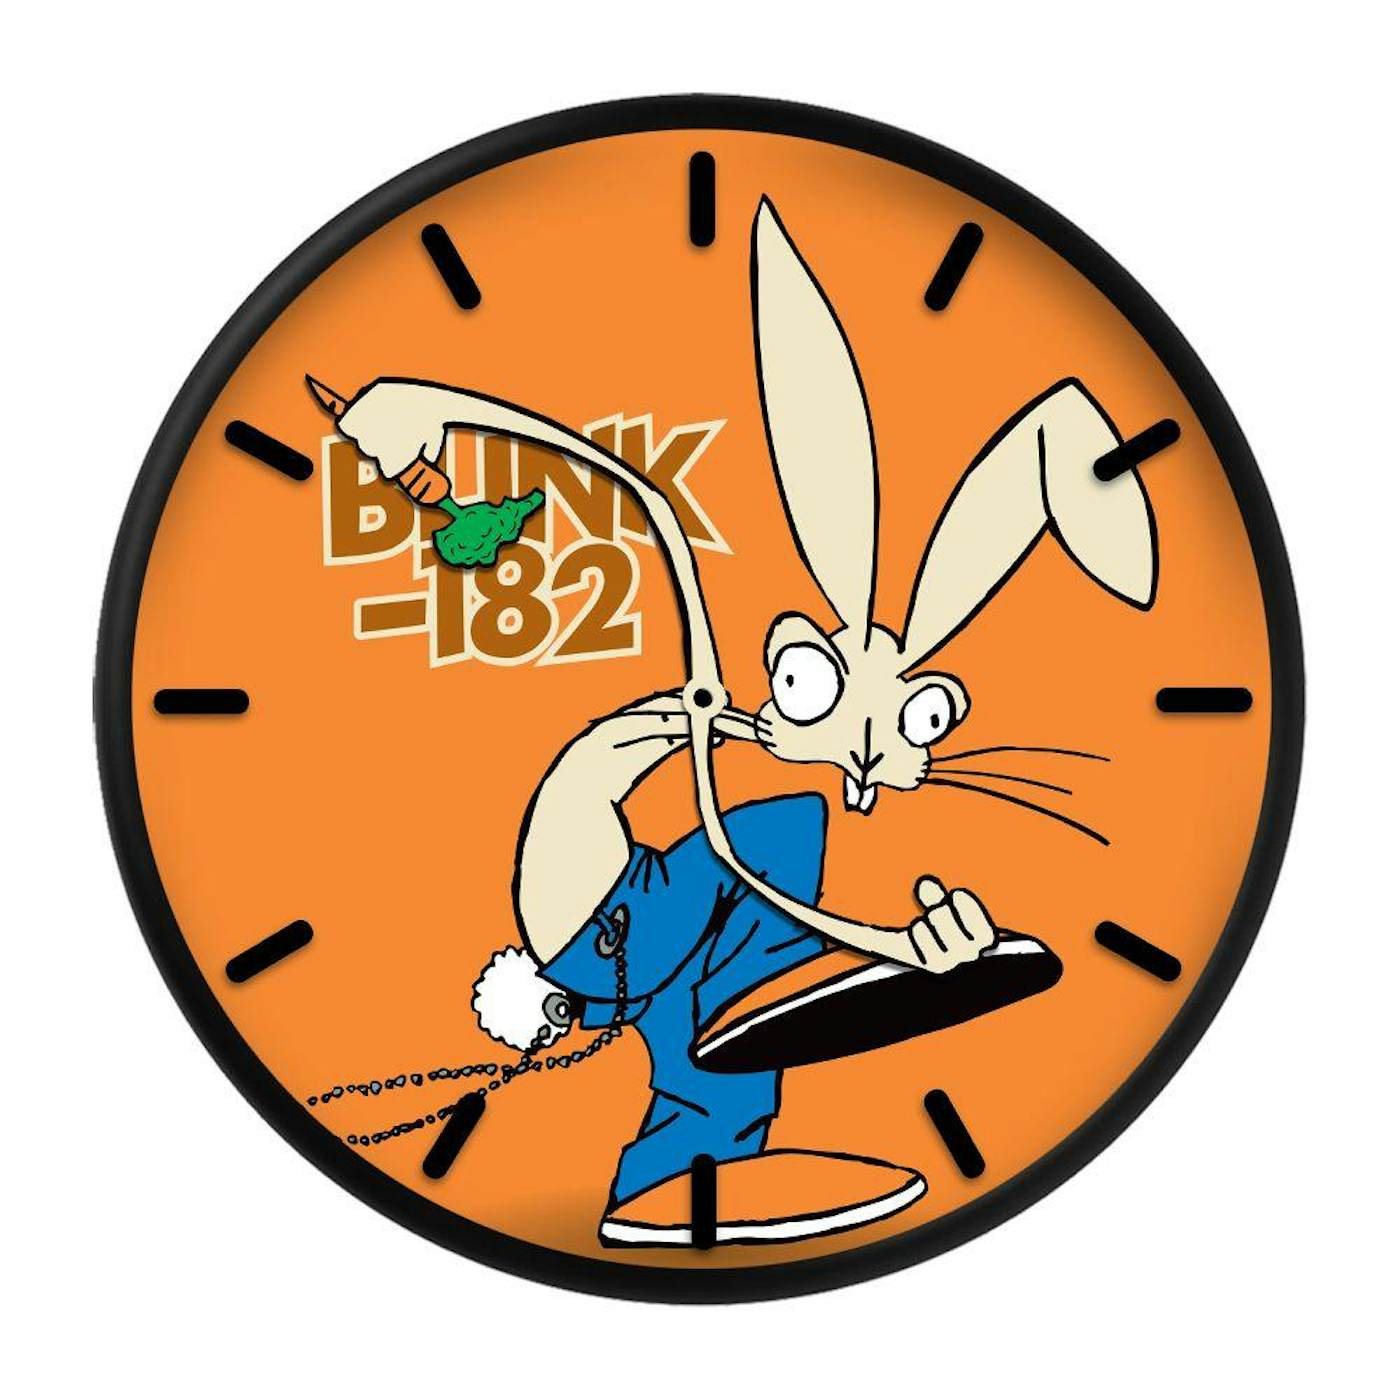 blink-182 Skankin Rabbit Orange Wall Clock